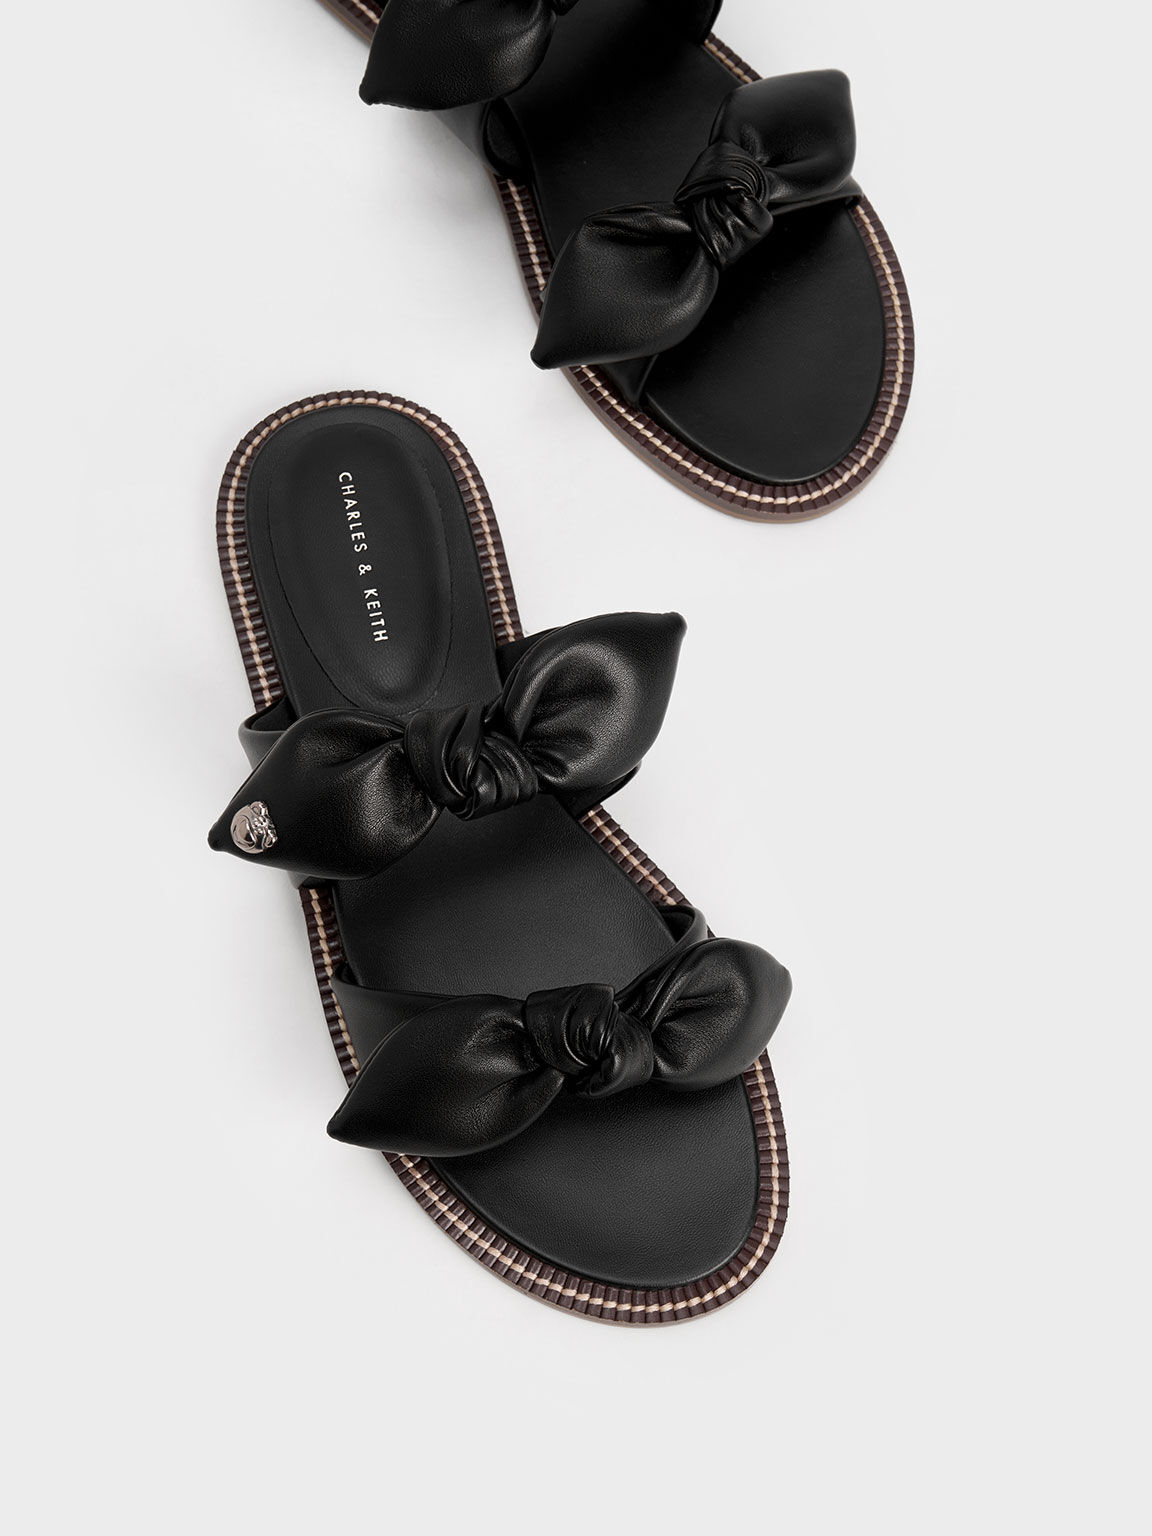 Lotso Double Knotted Slide Sandals, Black, hi-res